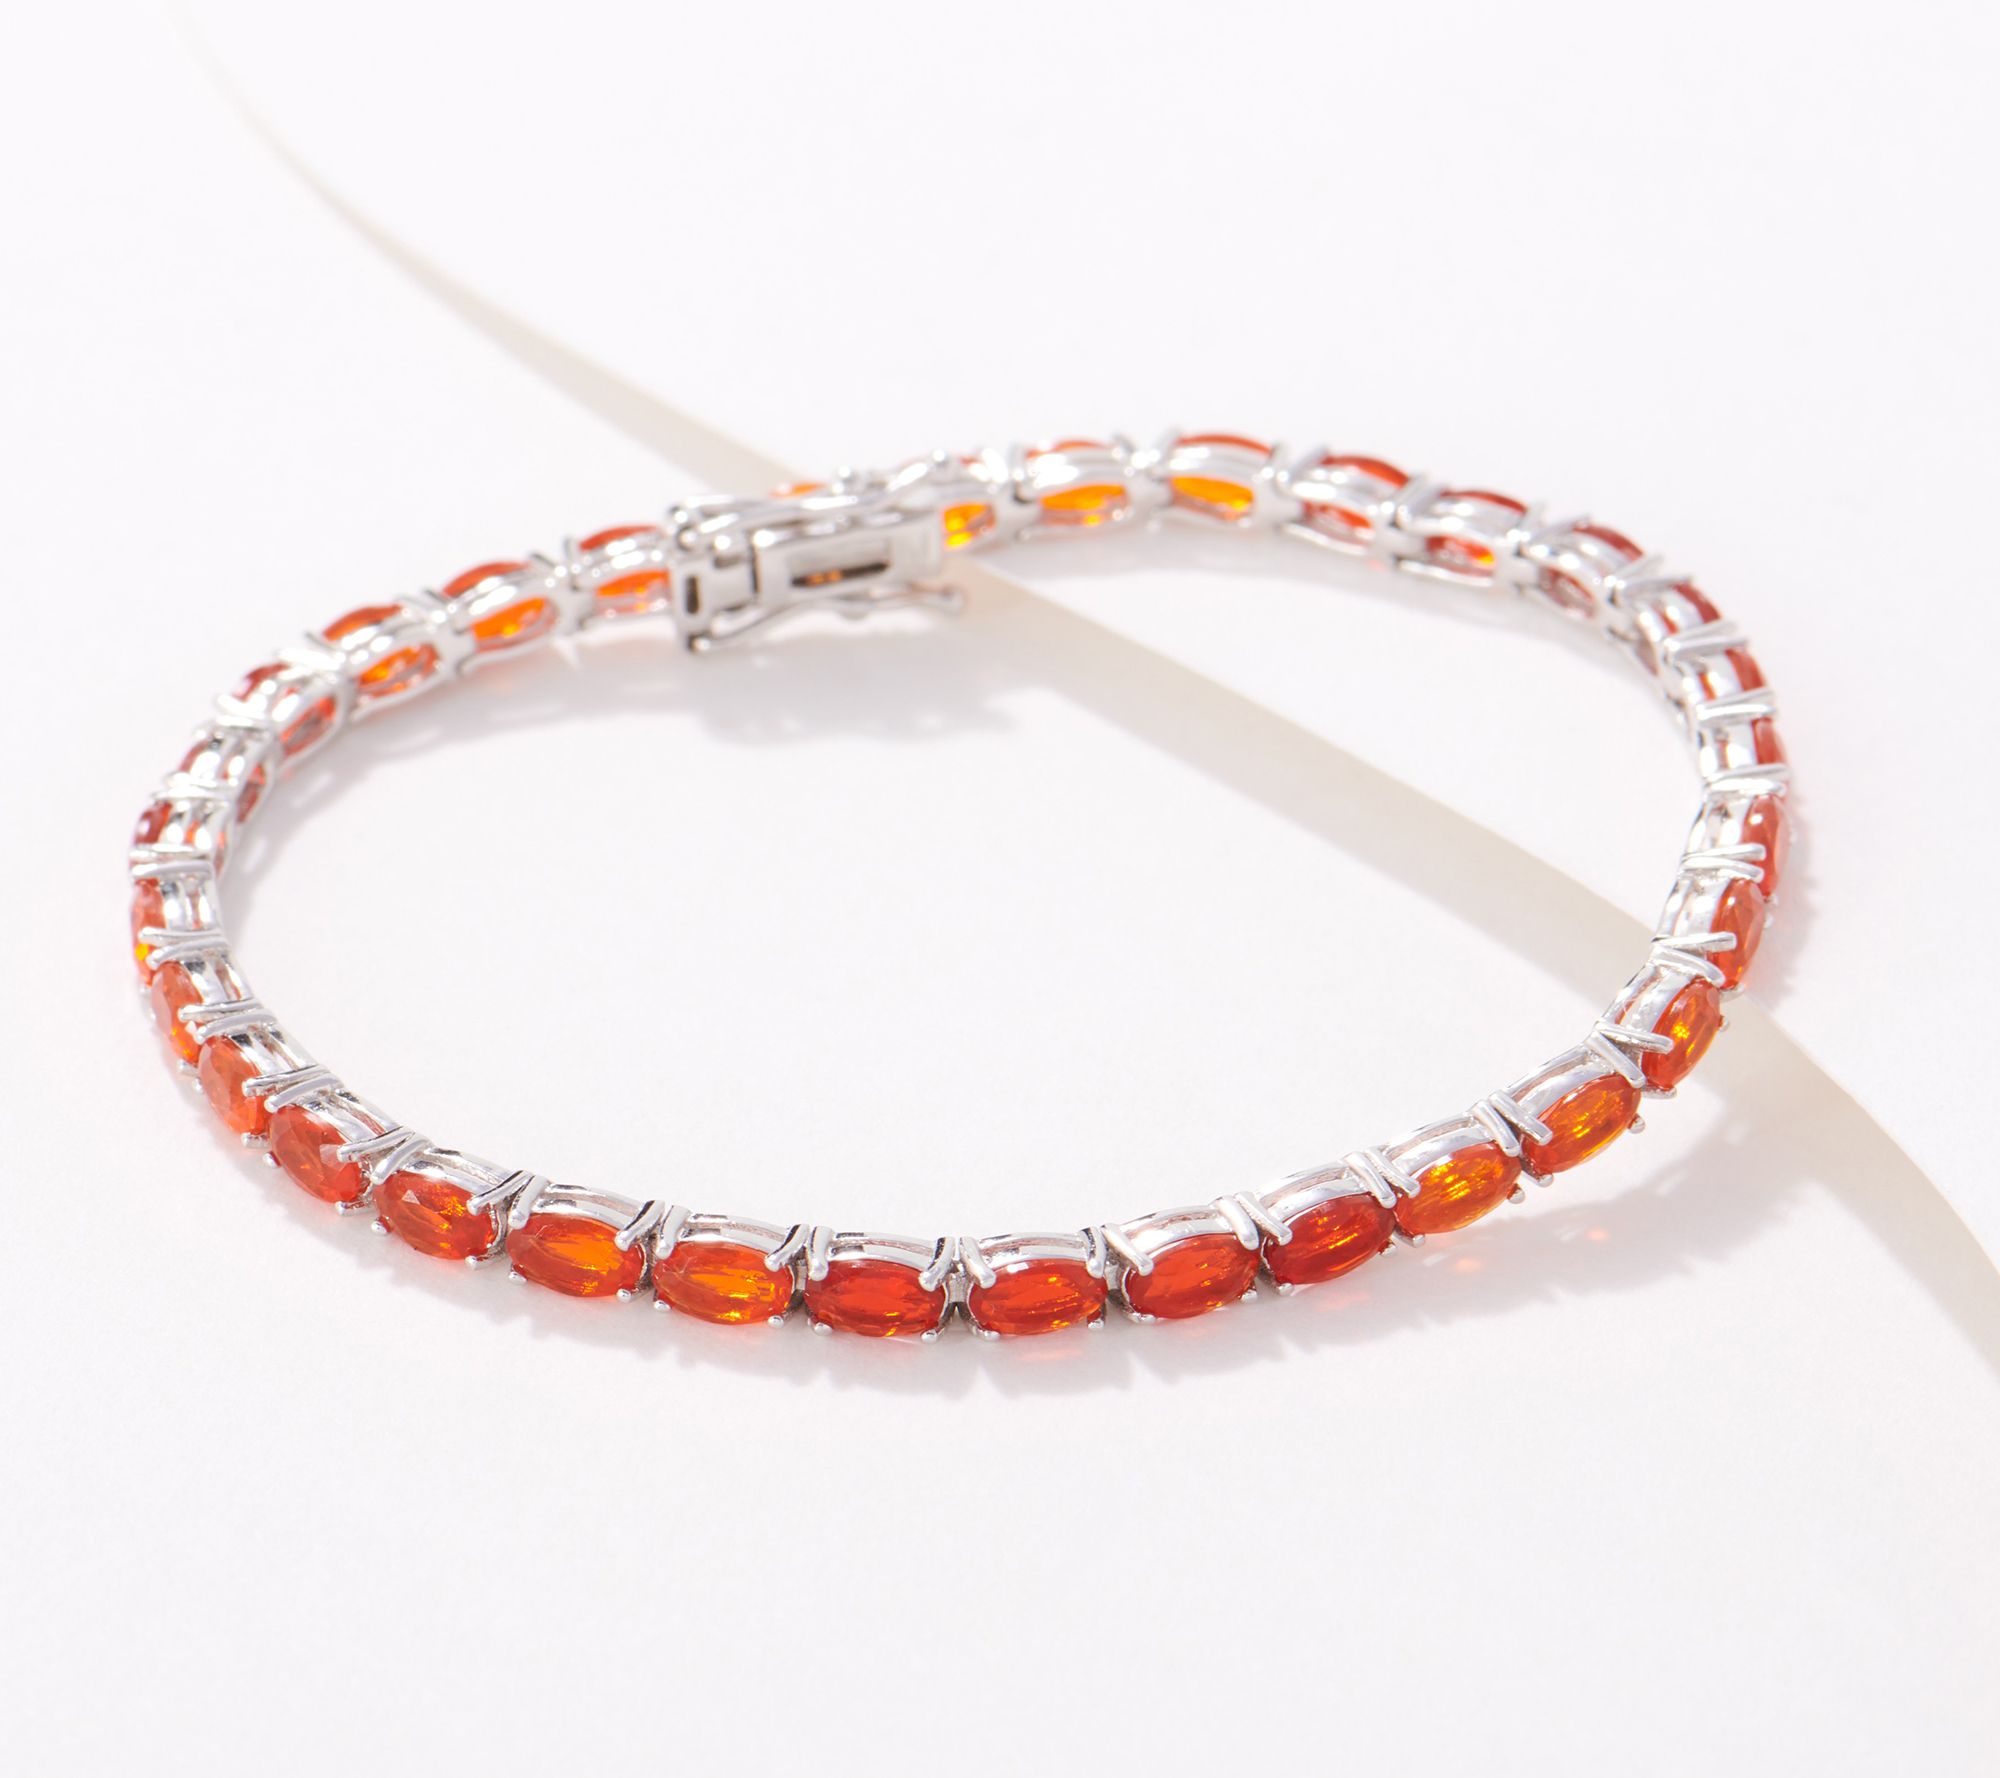 Oval Mexican Orange Fire Opal with Clear Gemstones Sterling Silver Stud Earrings 